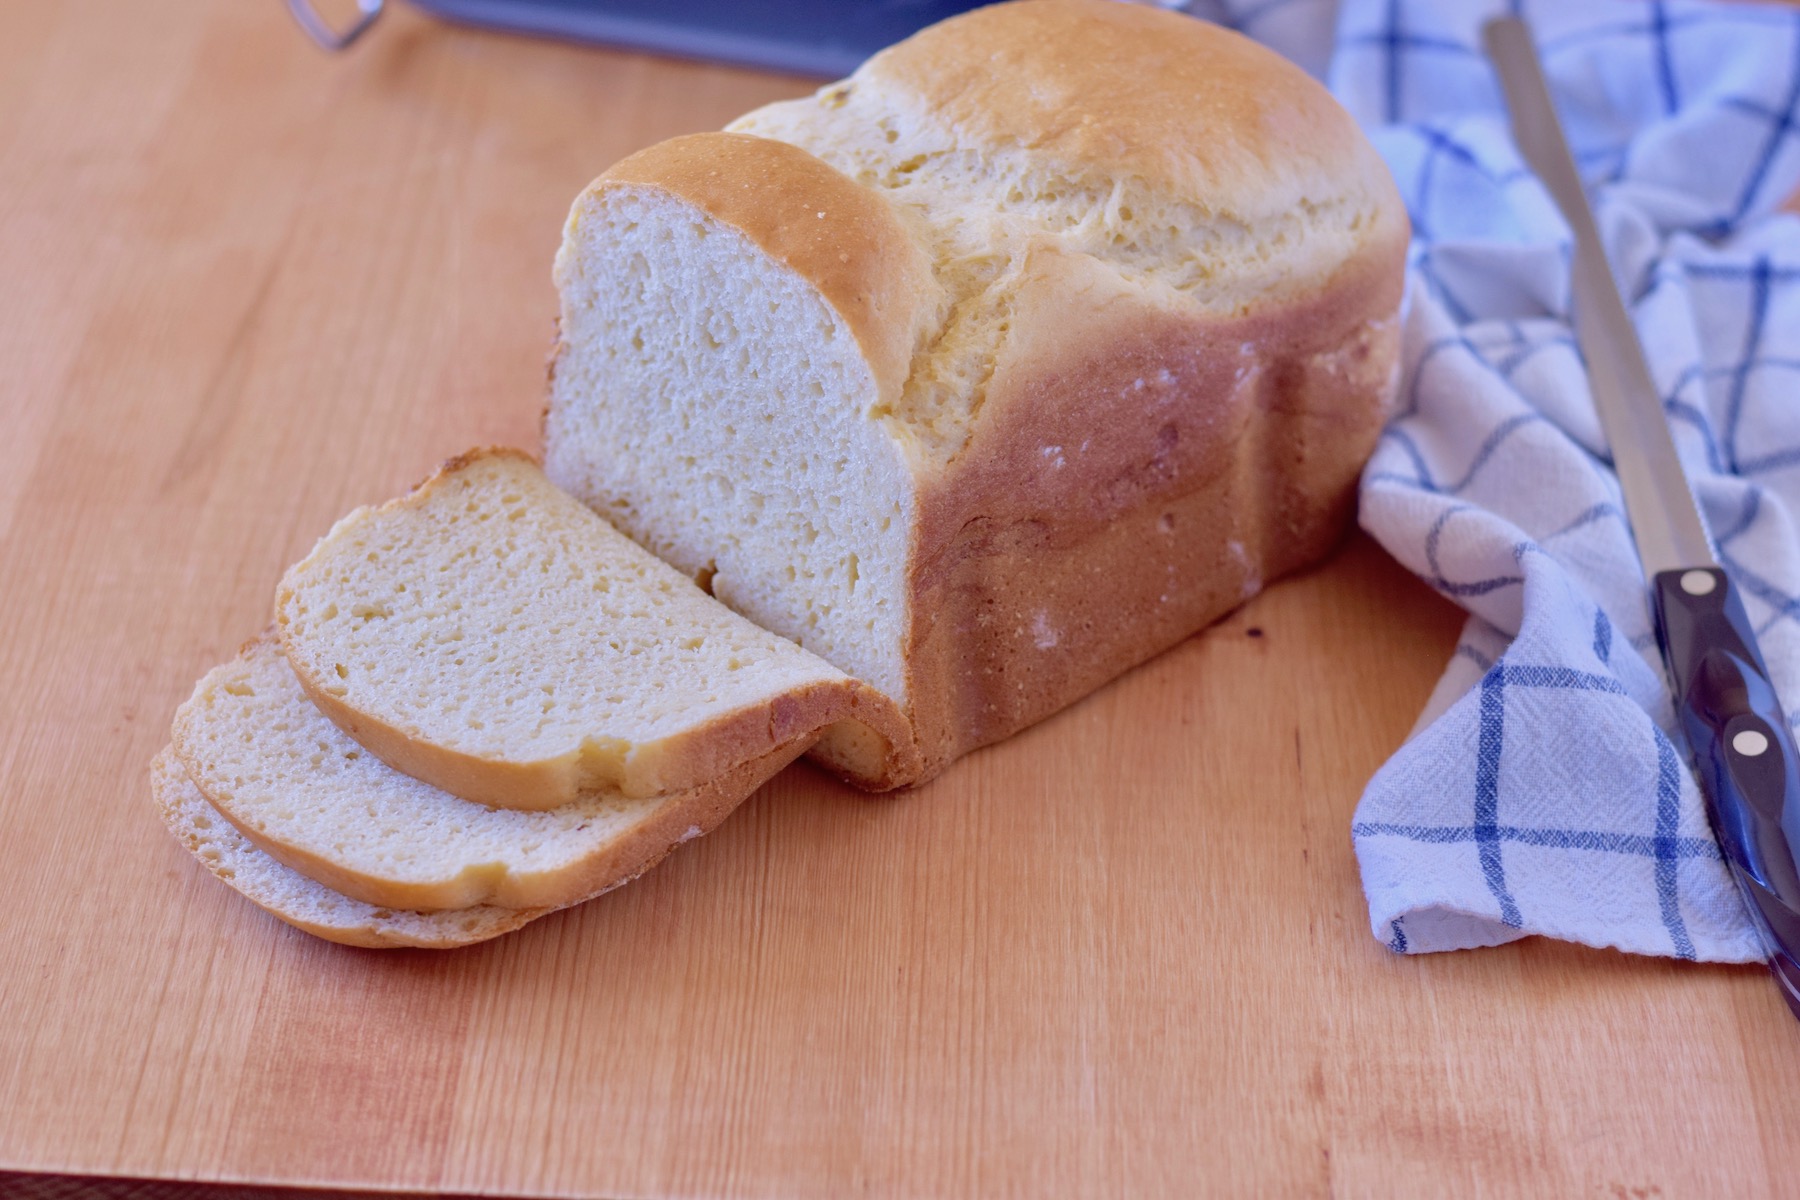 homemade gluten free bread